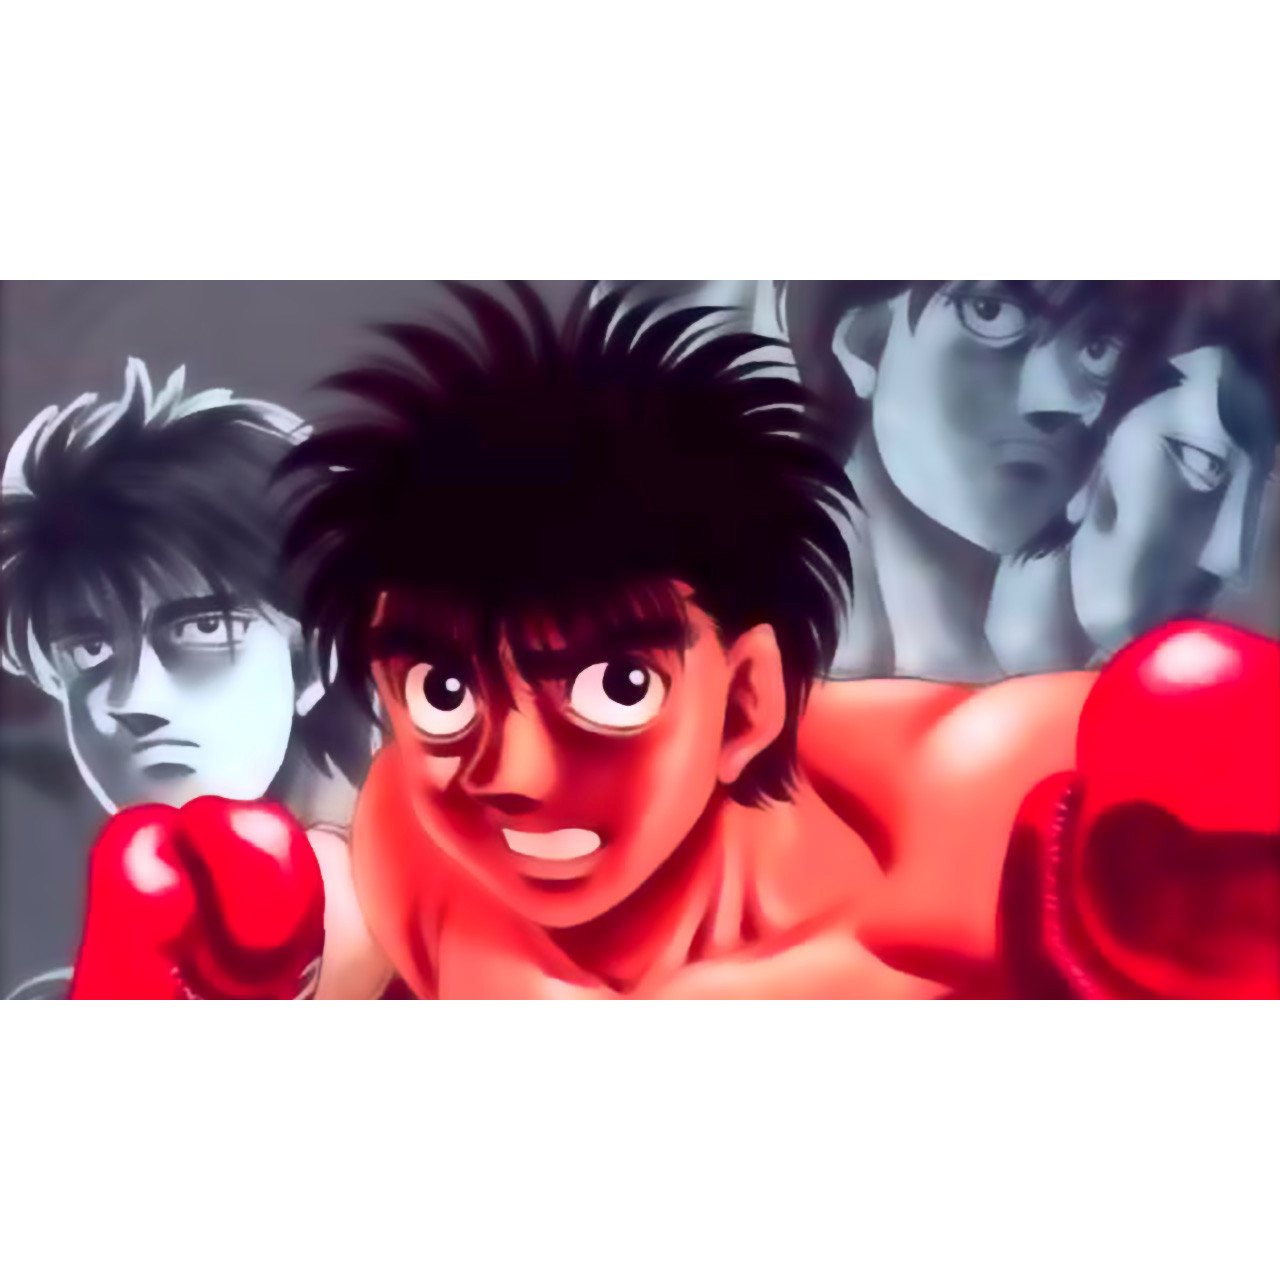 Hajime no Ippo: Victorious Boxers